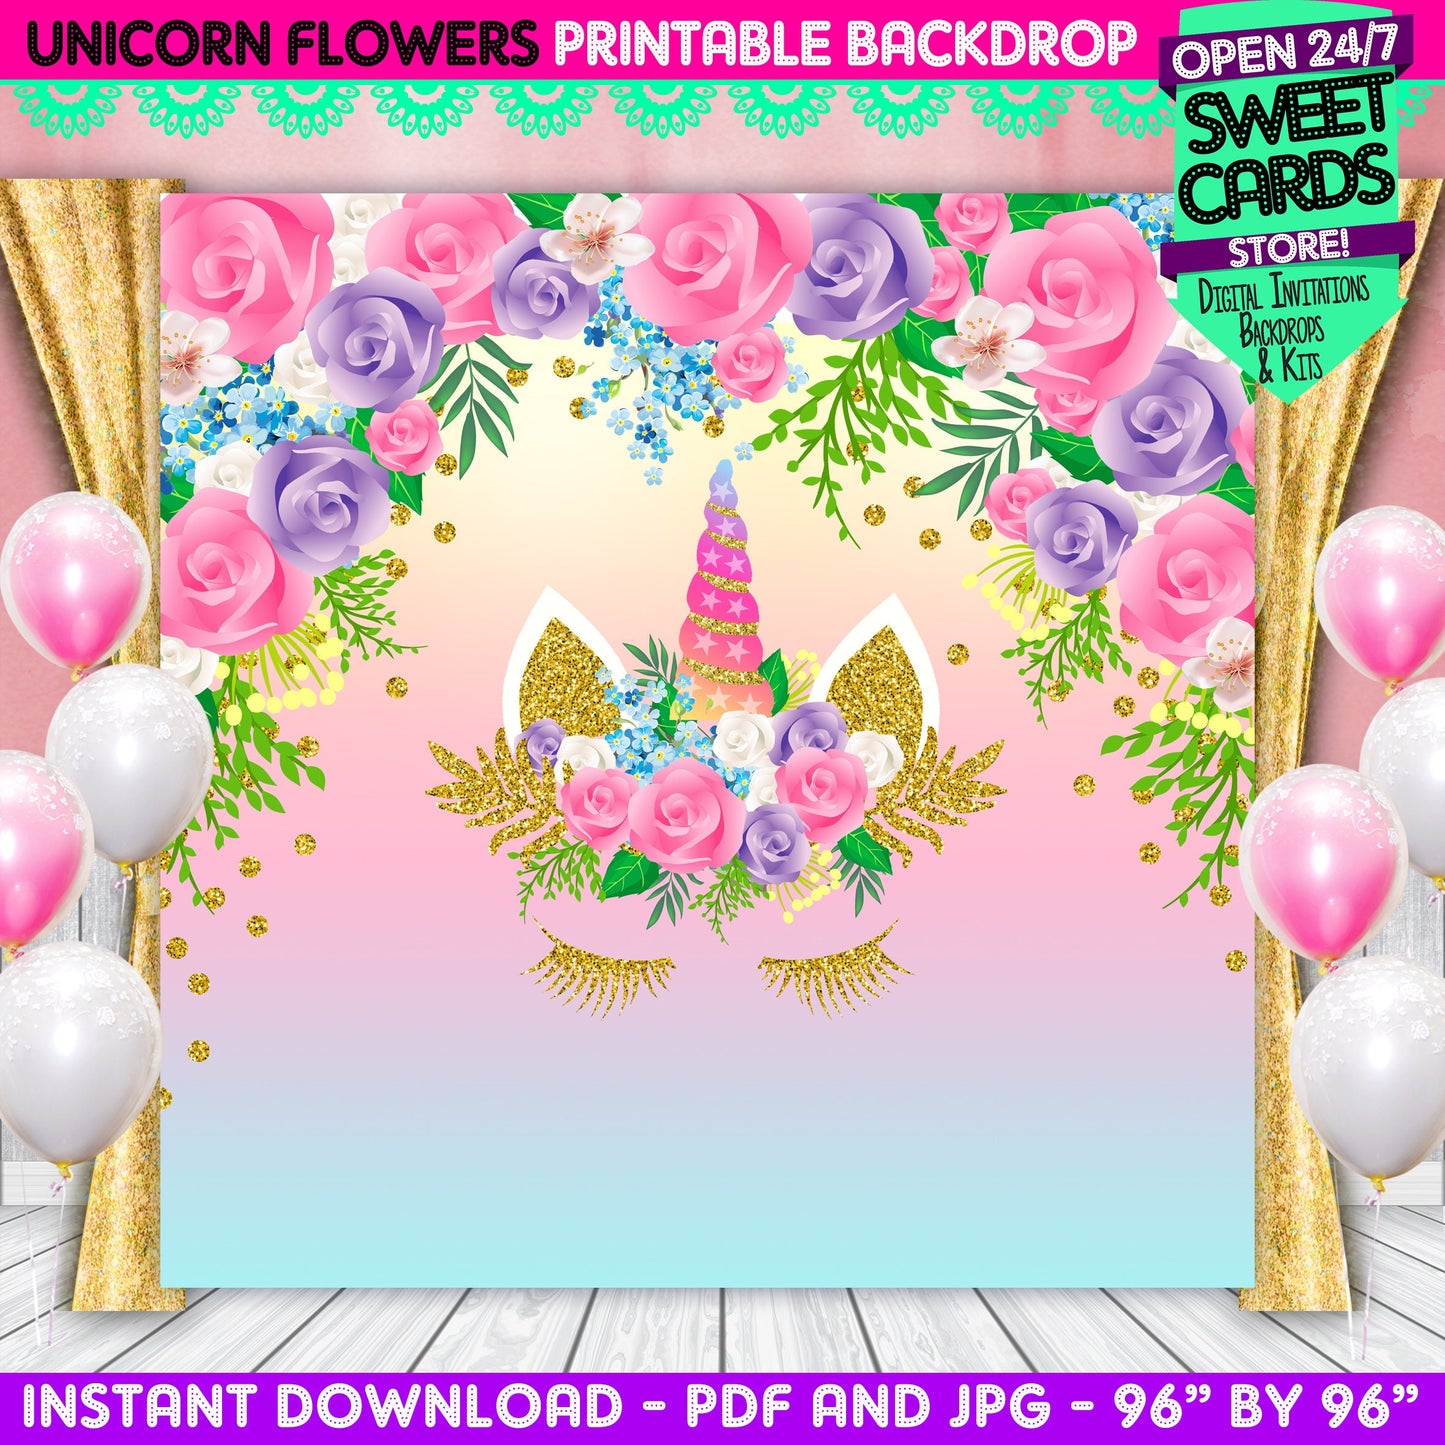 Unicorn printable digital backdrop, unicorn party, unicorn flowers decoration, unicorn birthday, unicorn banner,baby shower,